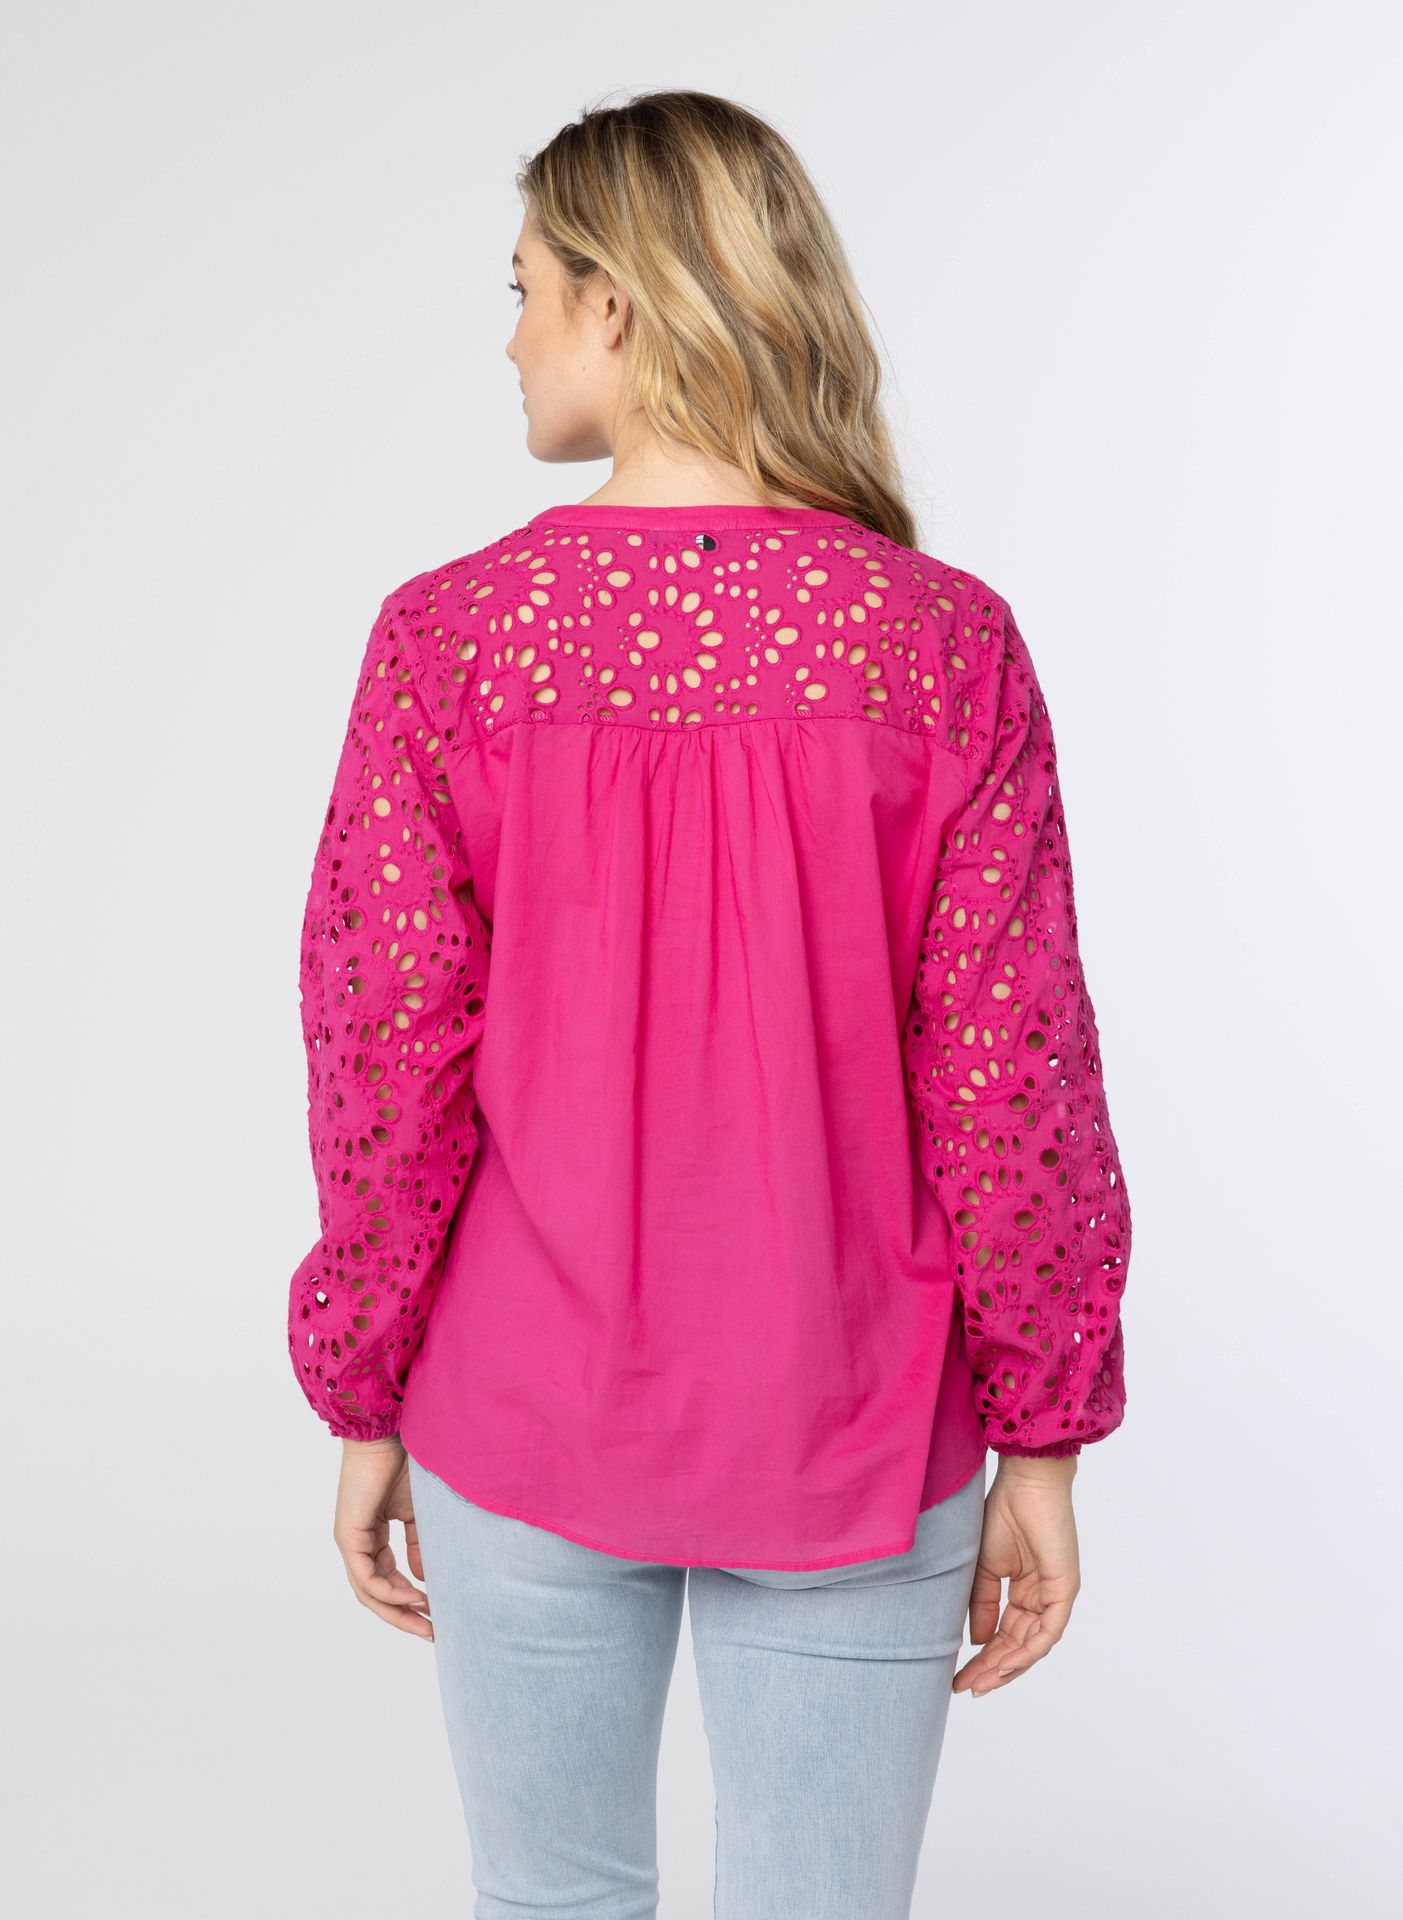 Norah Fuchsia blouse embroidery geranium 213670-664